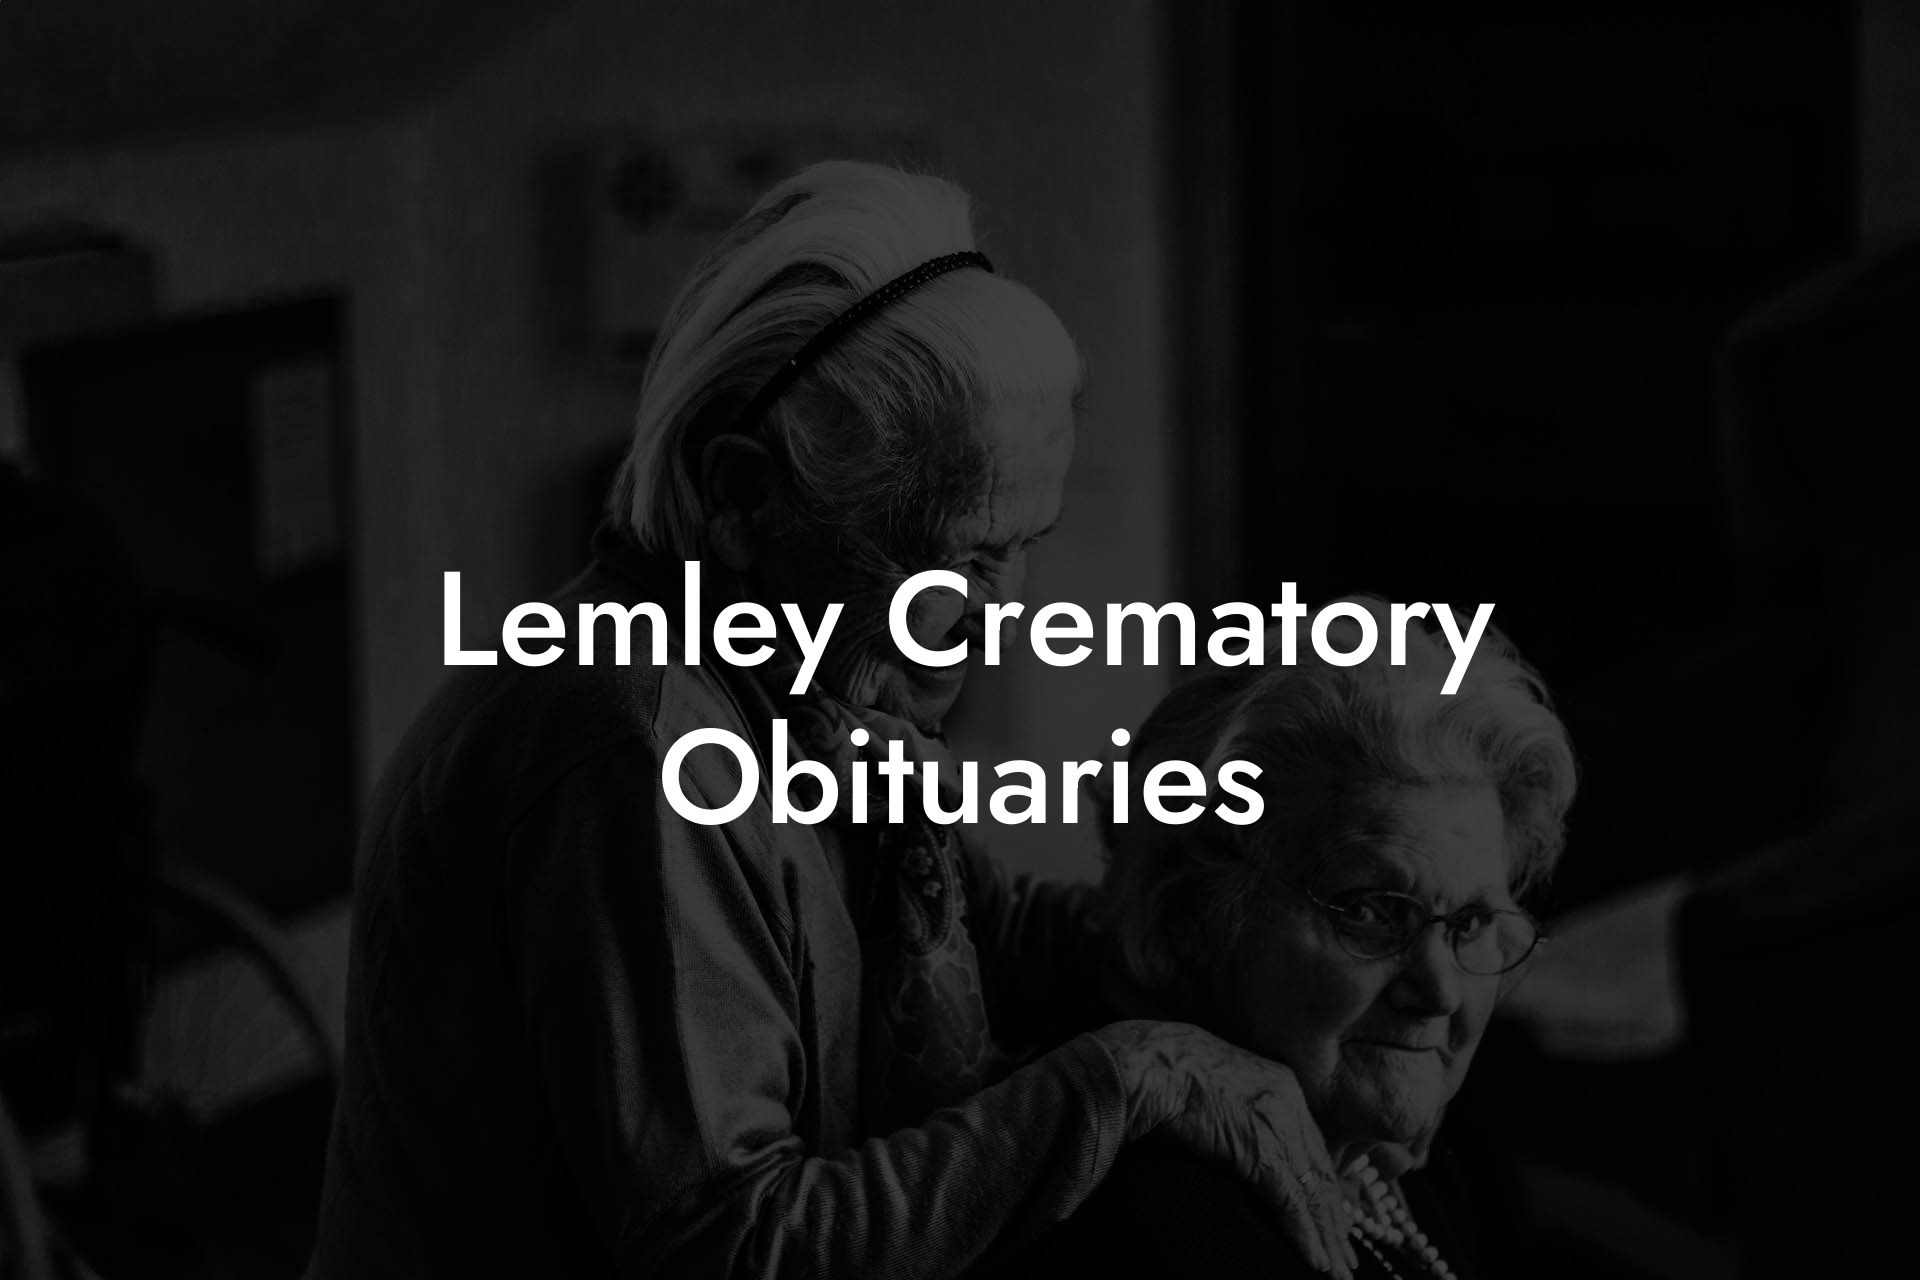 Lemley Crematory Obituaries